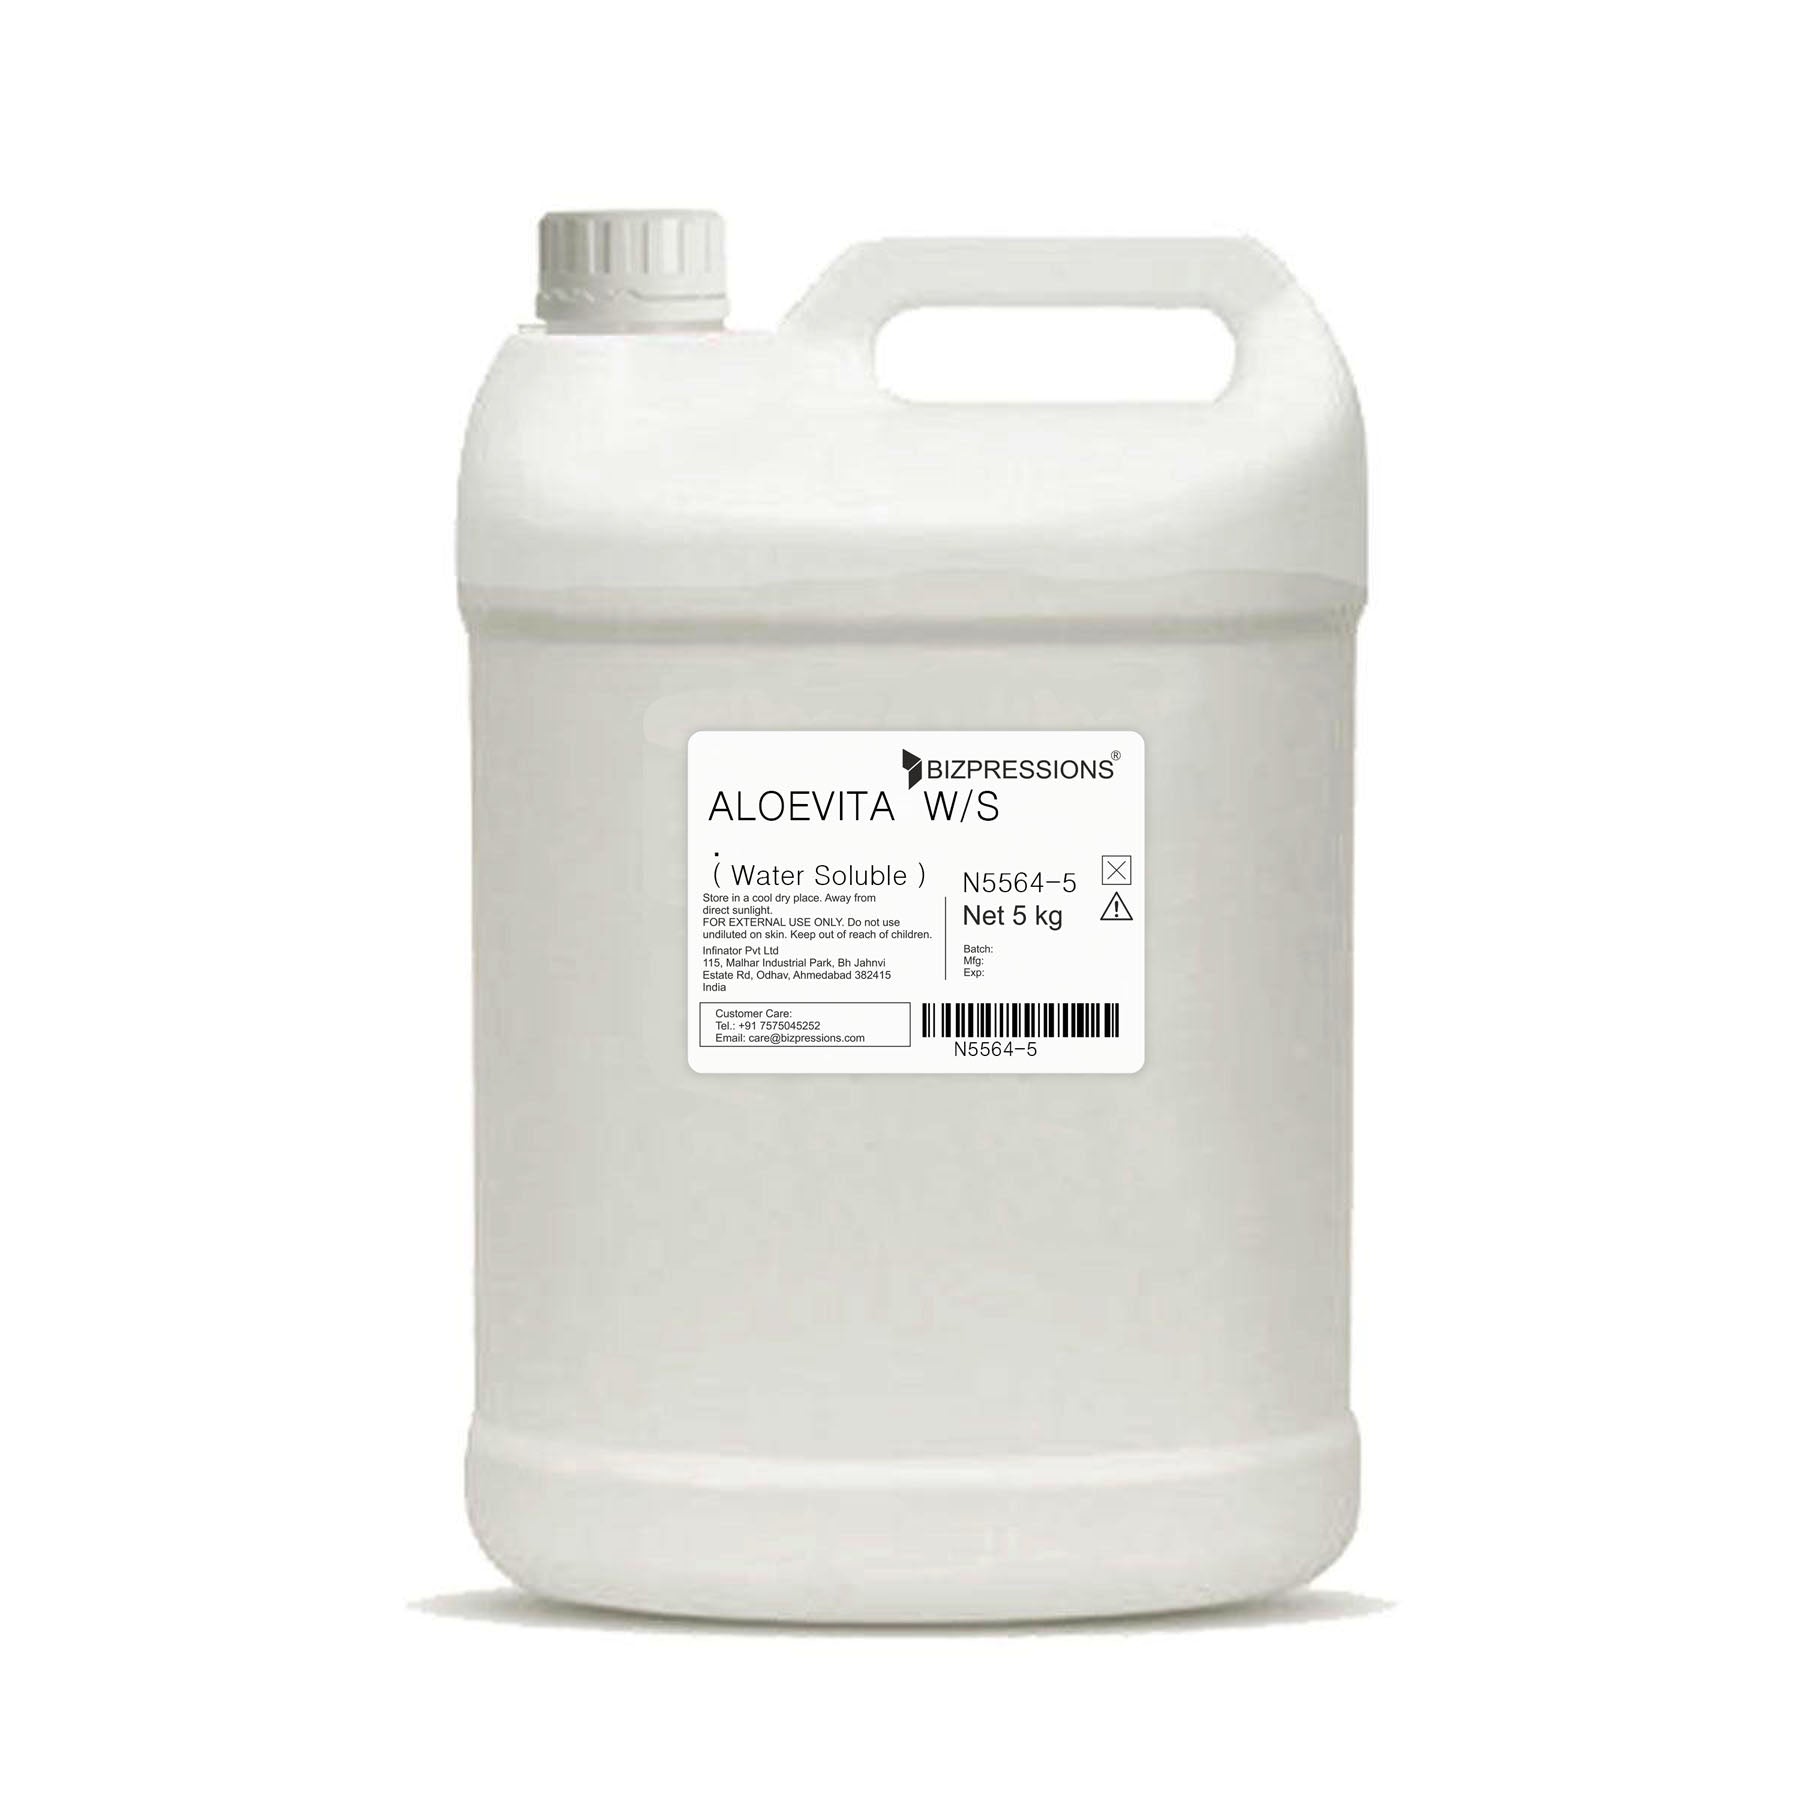 ALOEVITA W/S - Fragrance ( Water Soluble ) - 5 kg